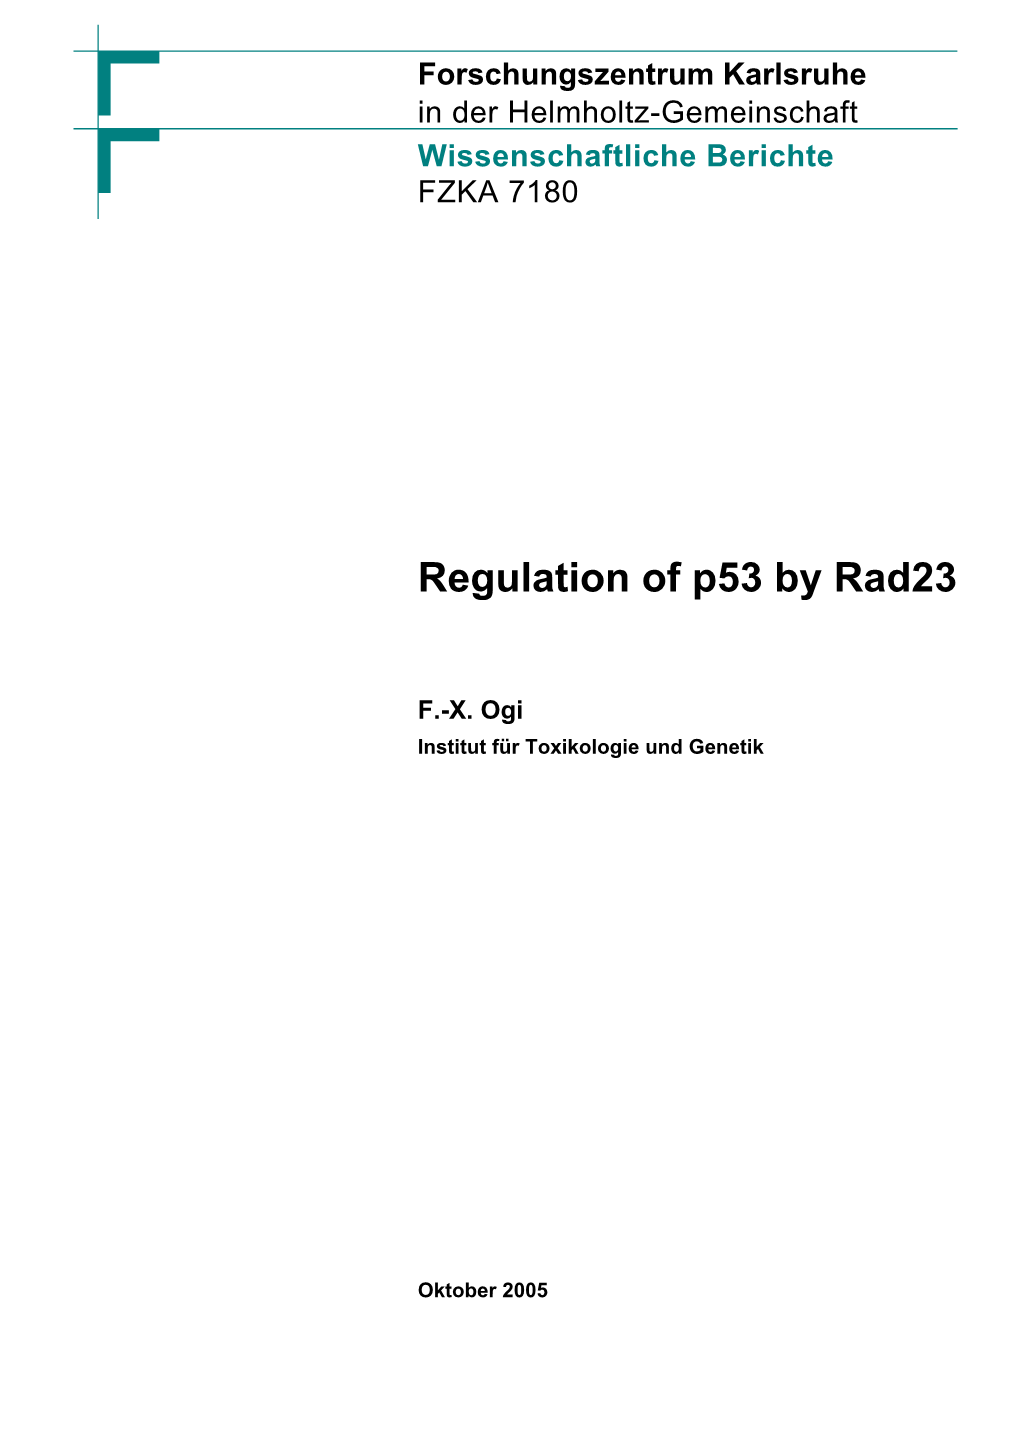 Regulation of P53 by Rad23